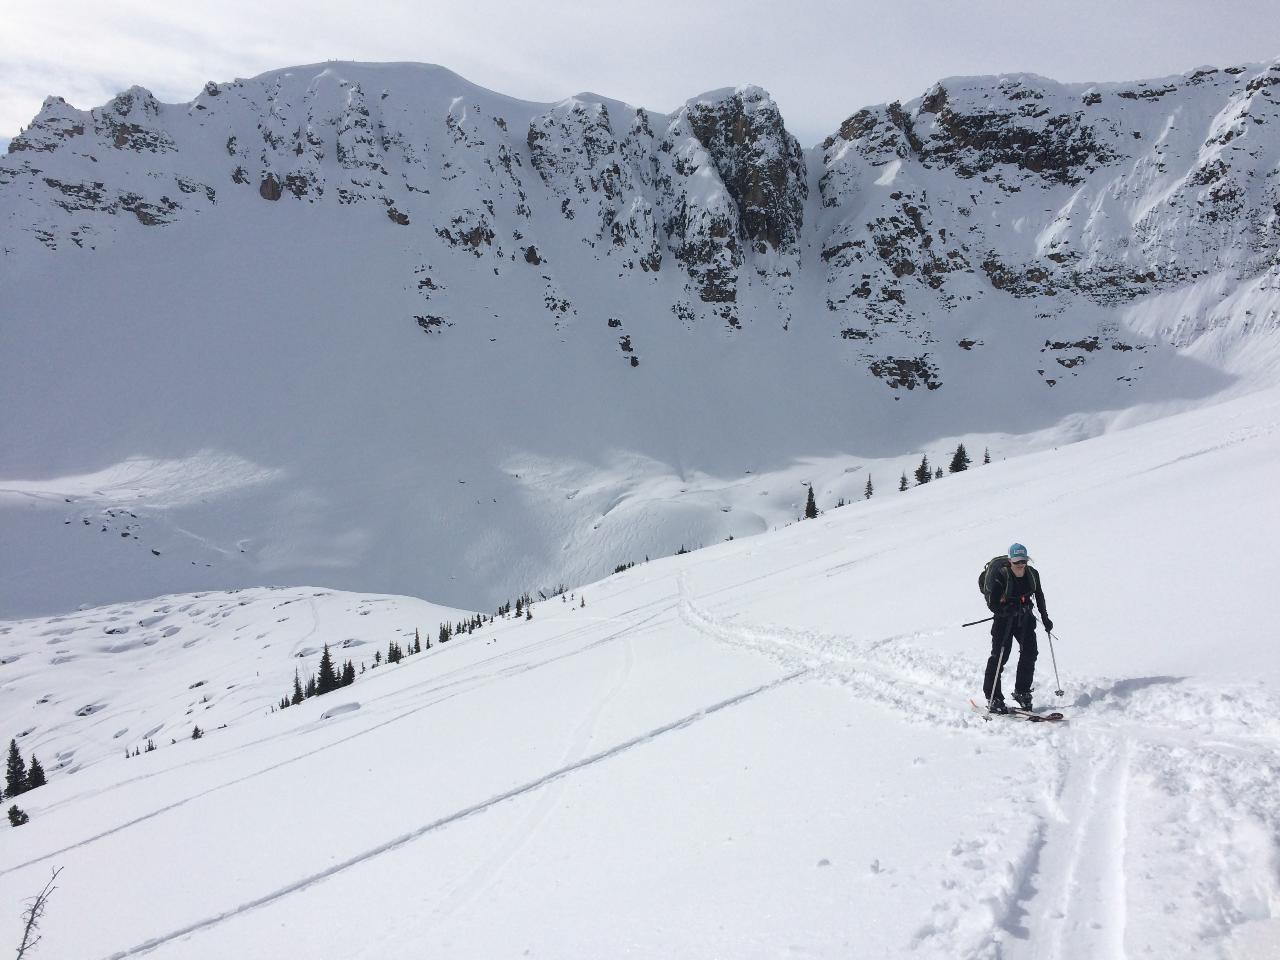 Ski & Board AST 1 - Big White, BC